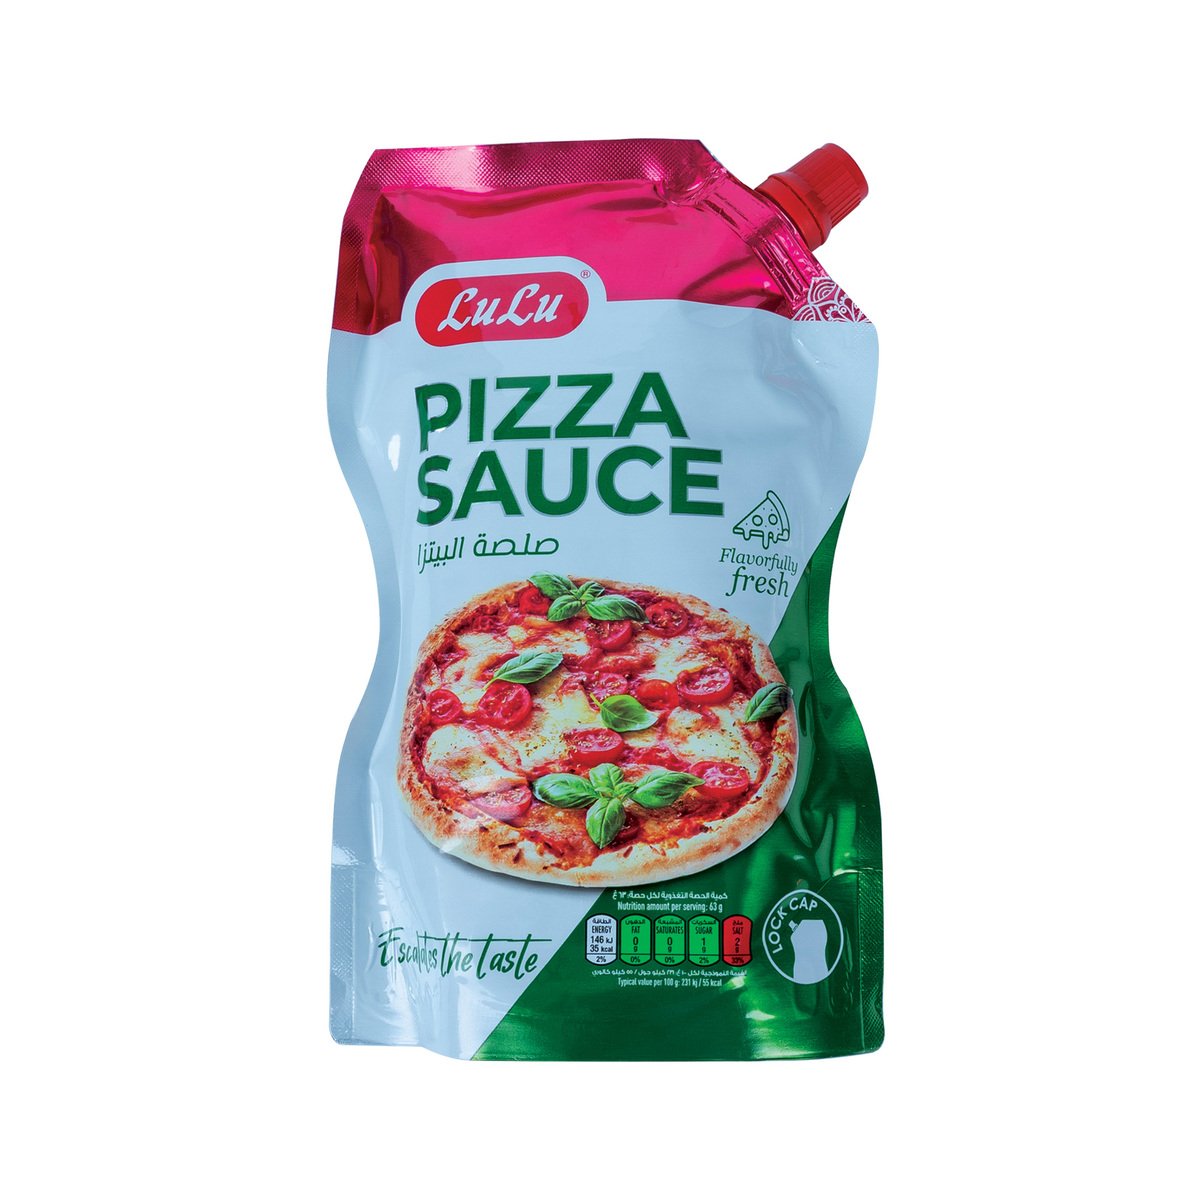 LuLu Pizza Sauce 475g